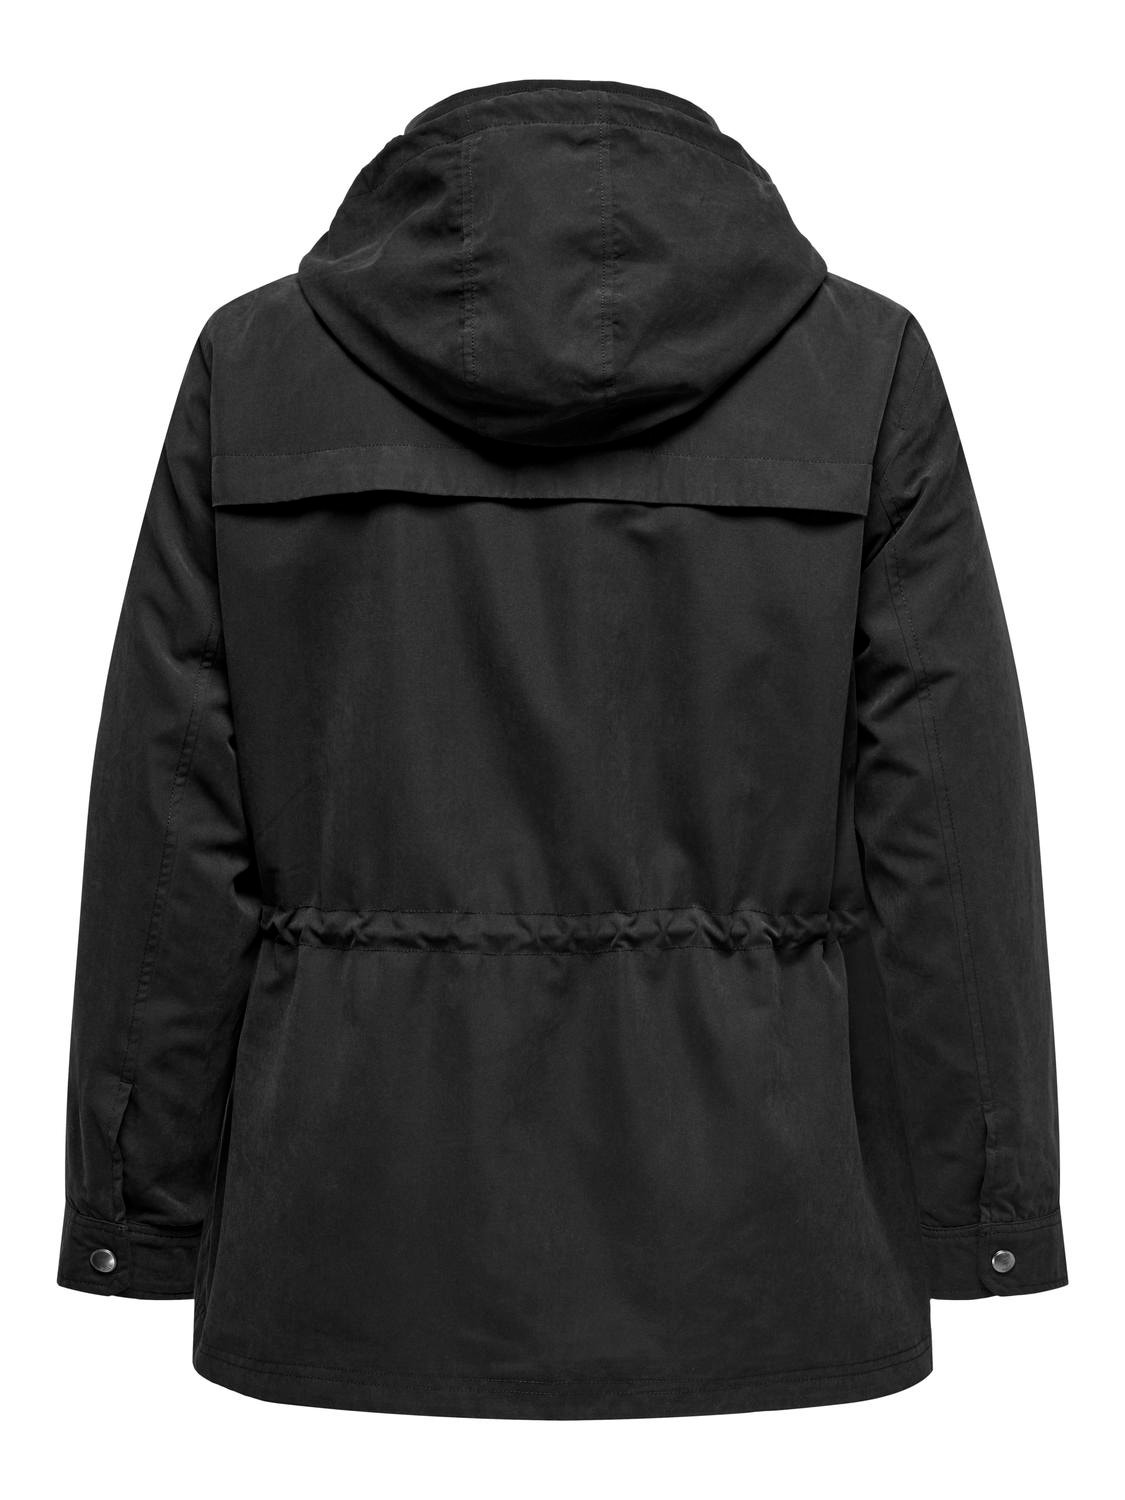 ONLY Curvy high neck jacket -Black - 15324874